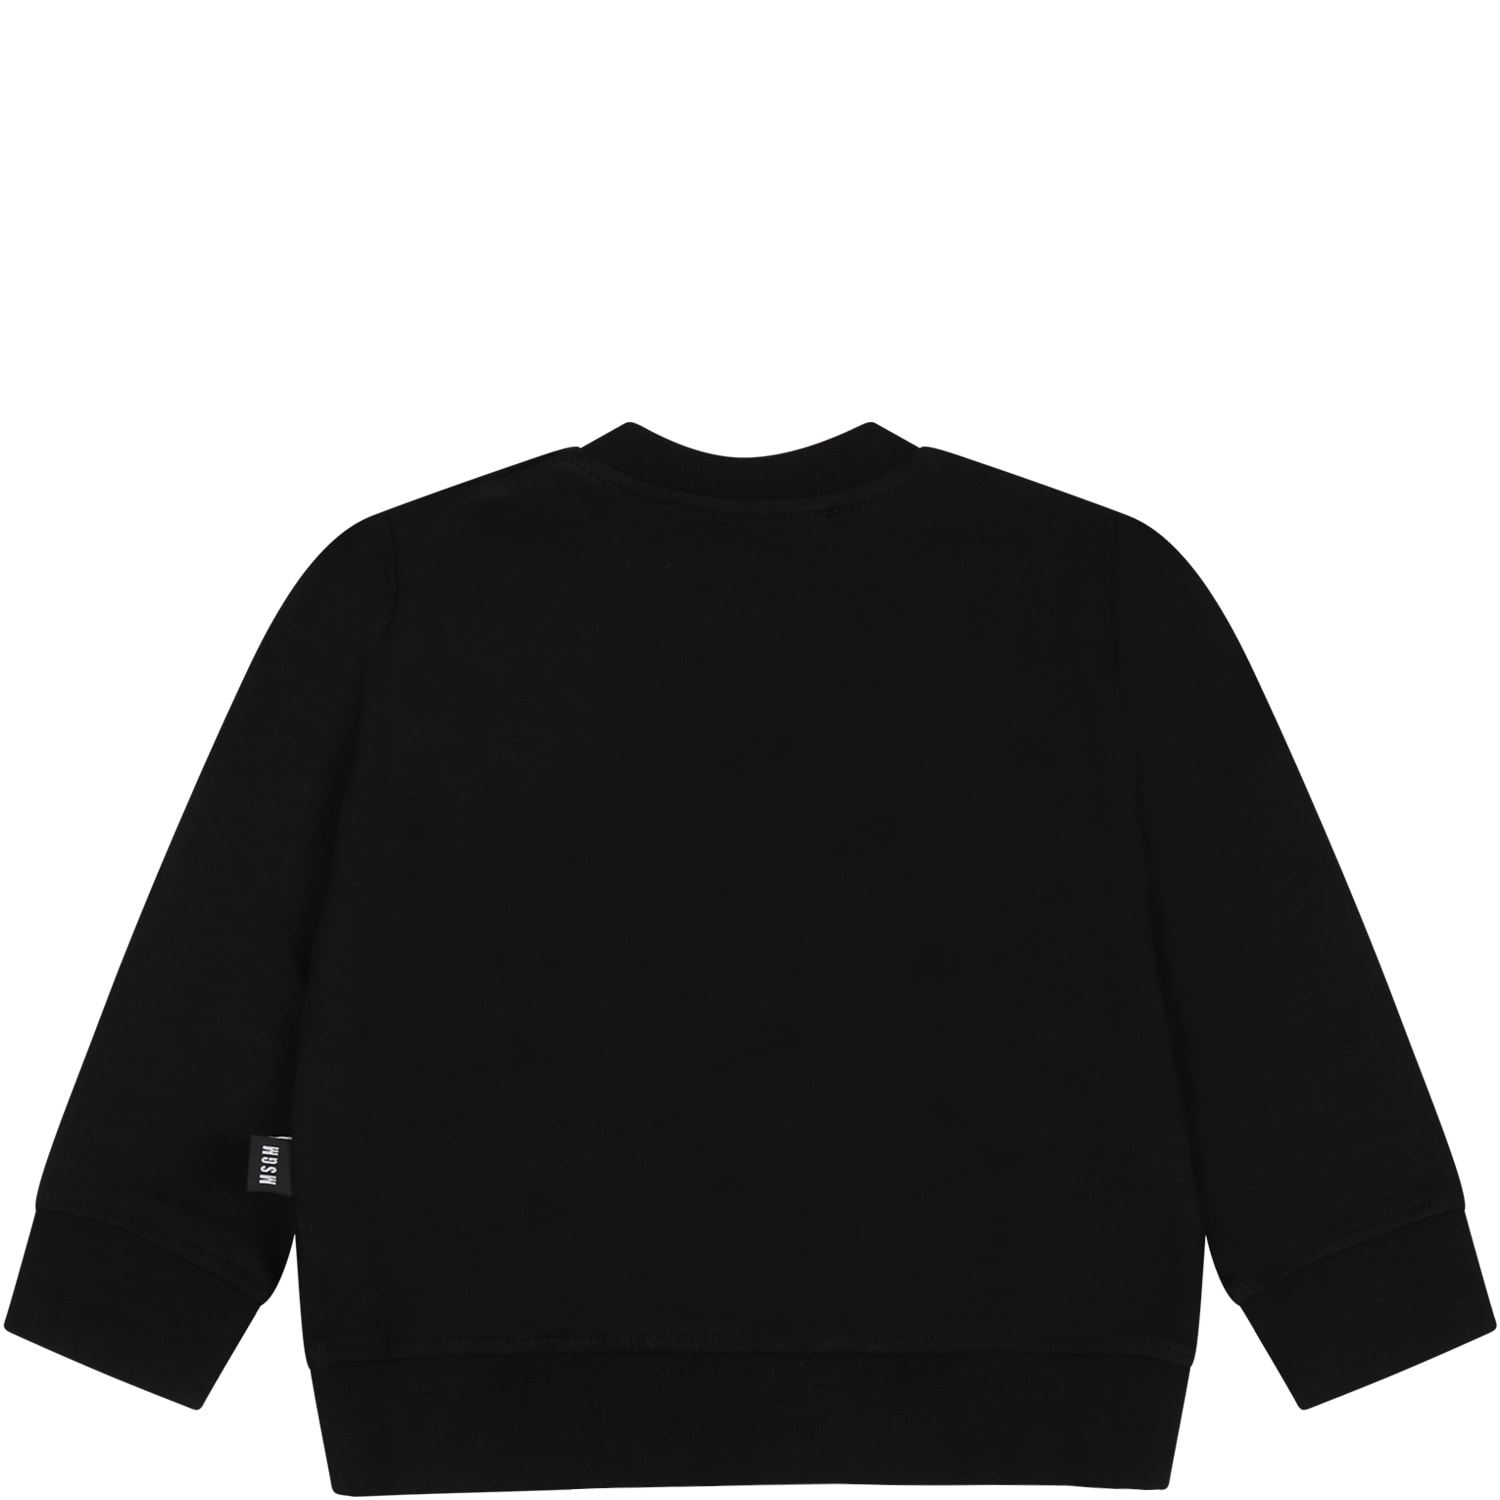 Shop Msgm Black Sweatshirt Fo Baby Girl With Logo